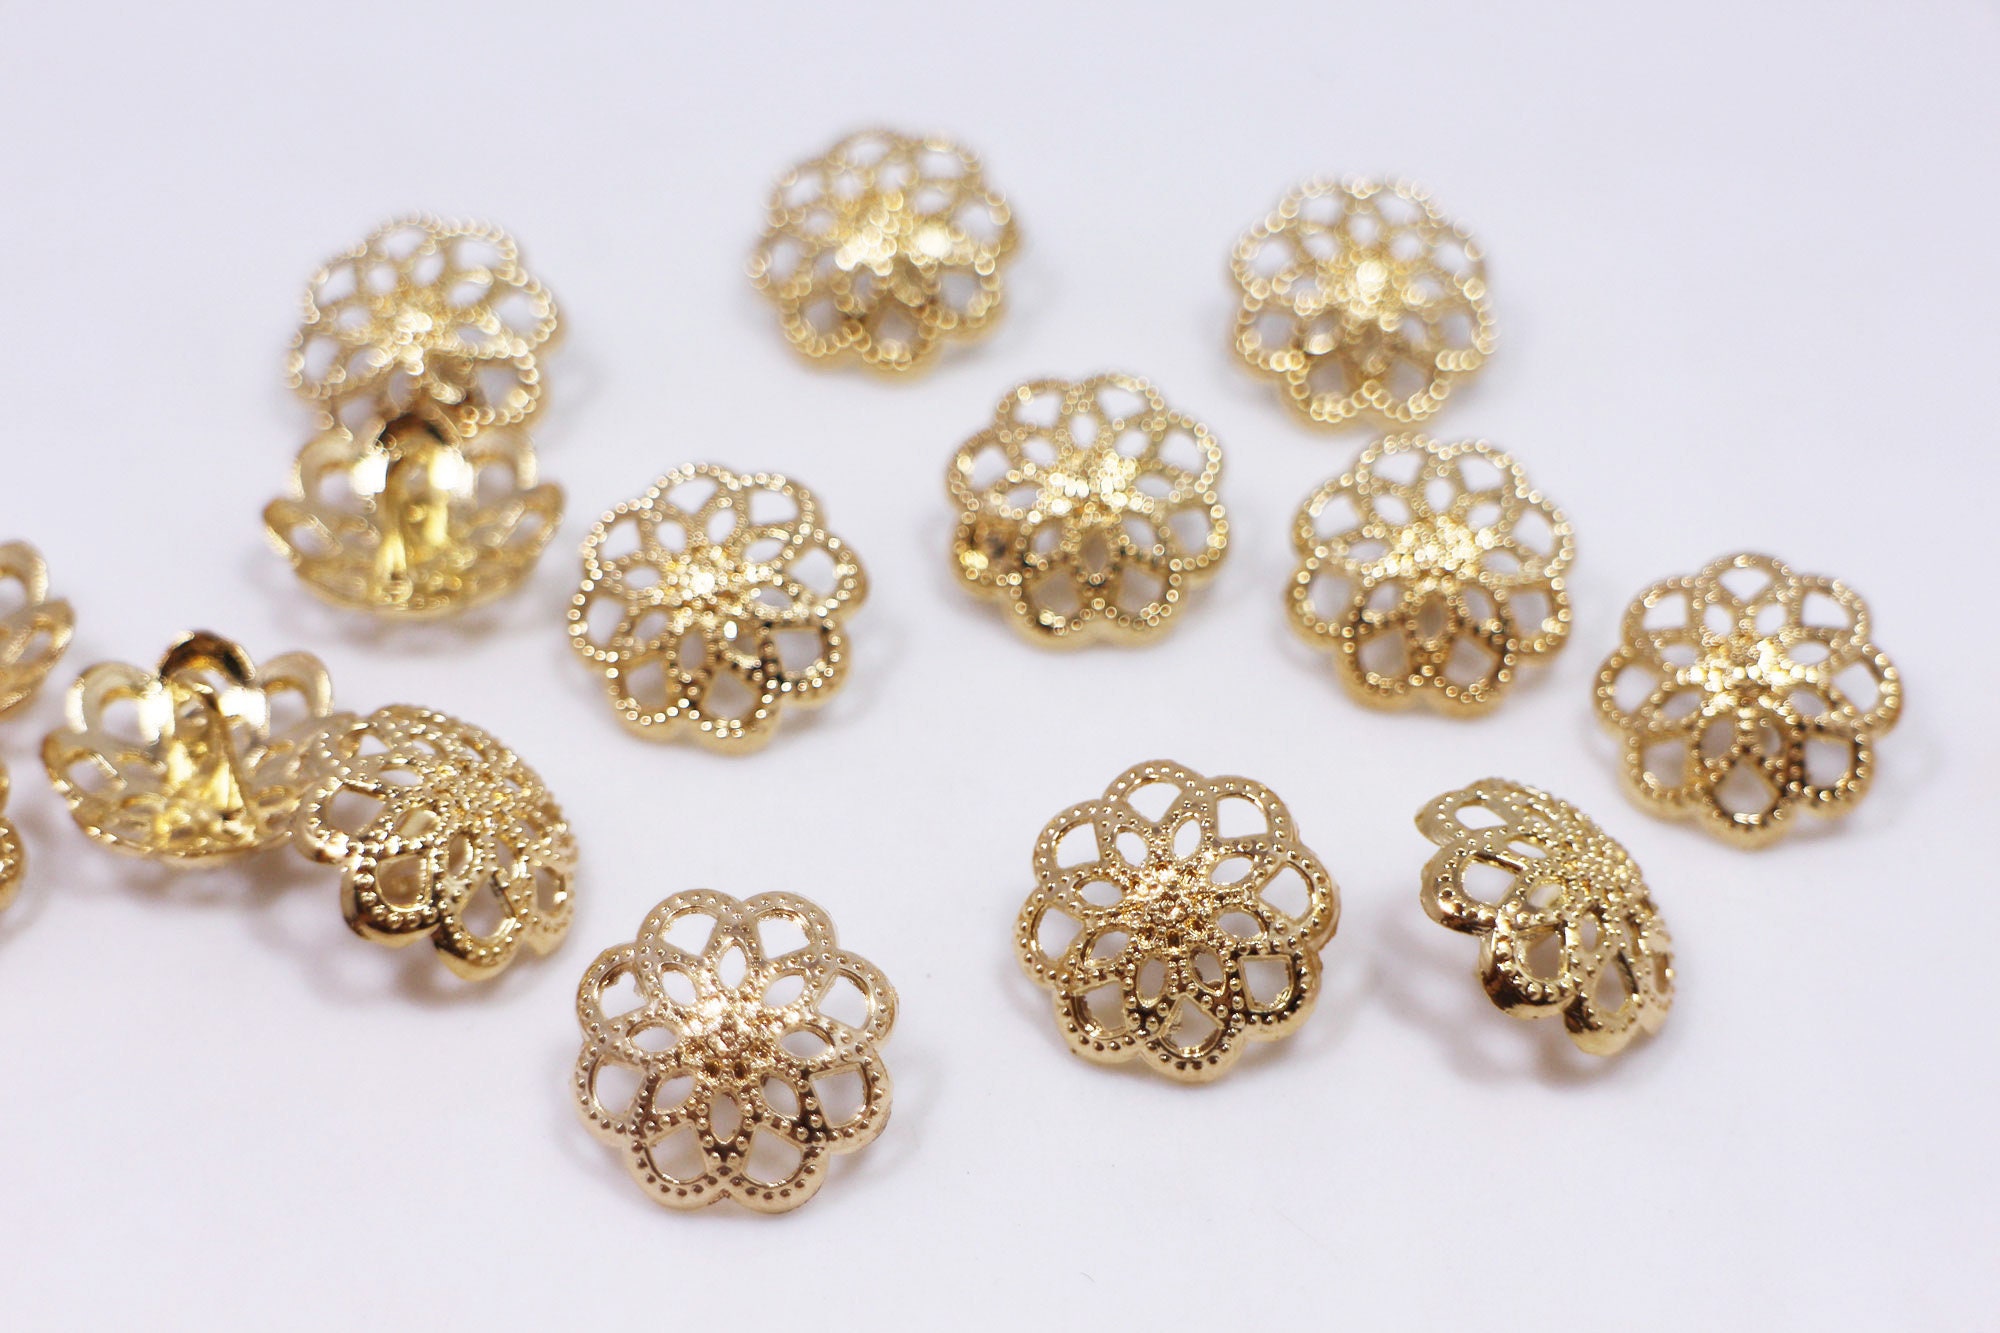 50 dark gold pretty plastic shank buttons filigree flower design 20mm 3/4" 